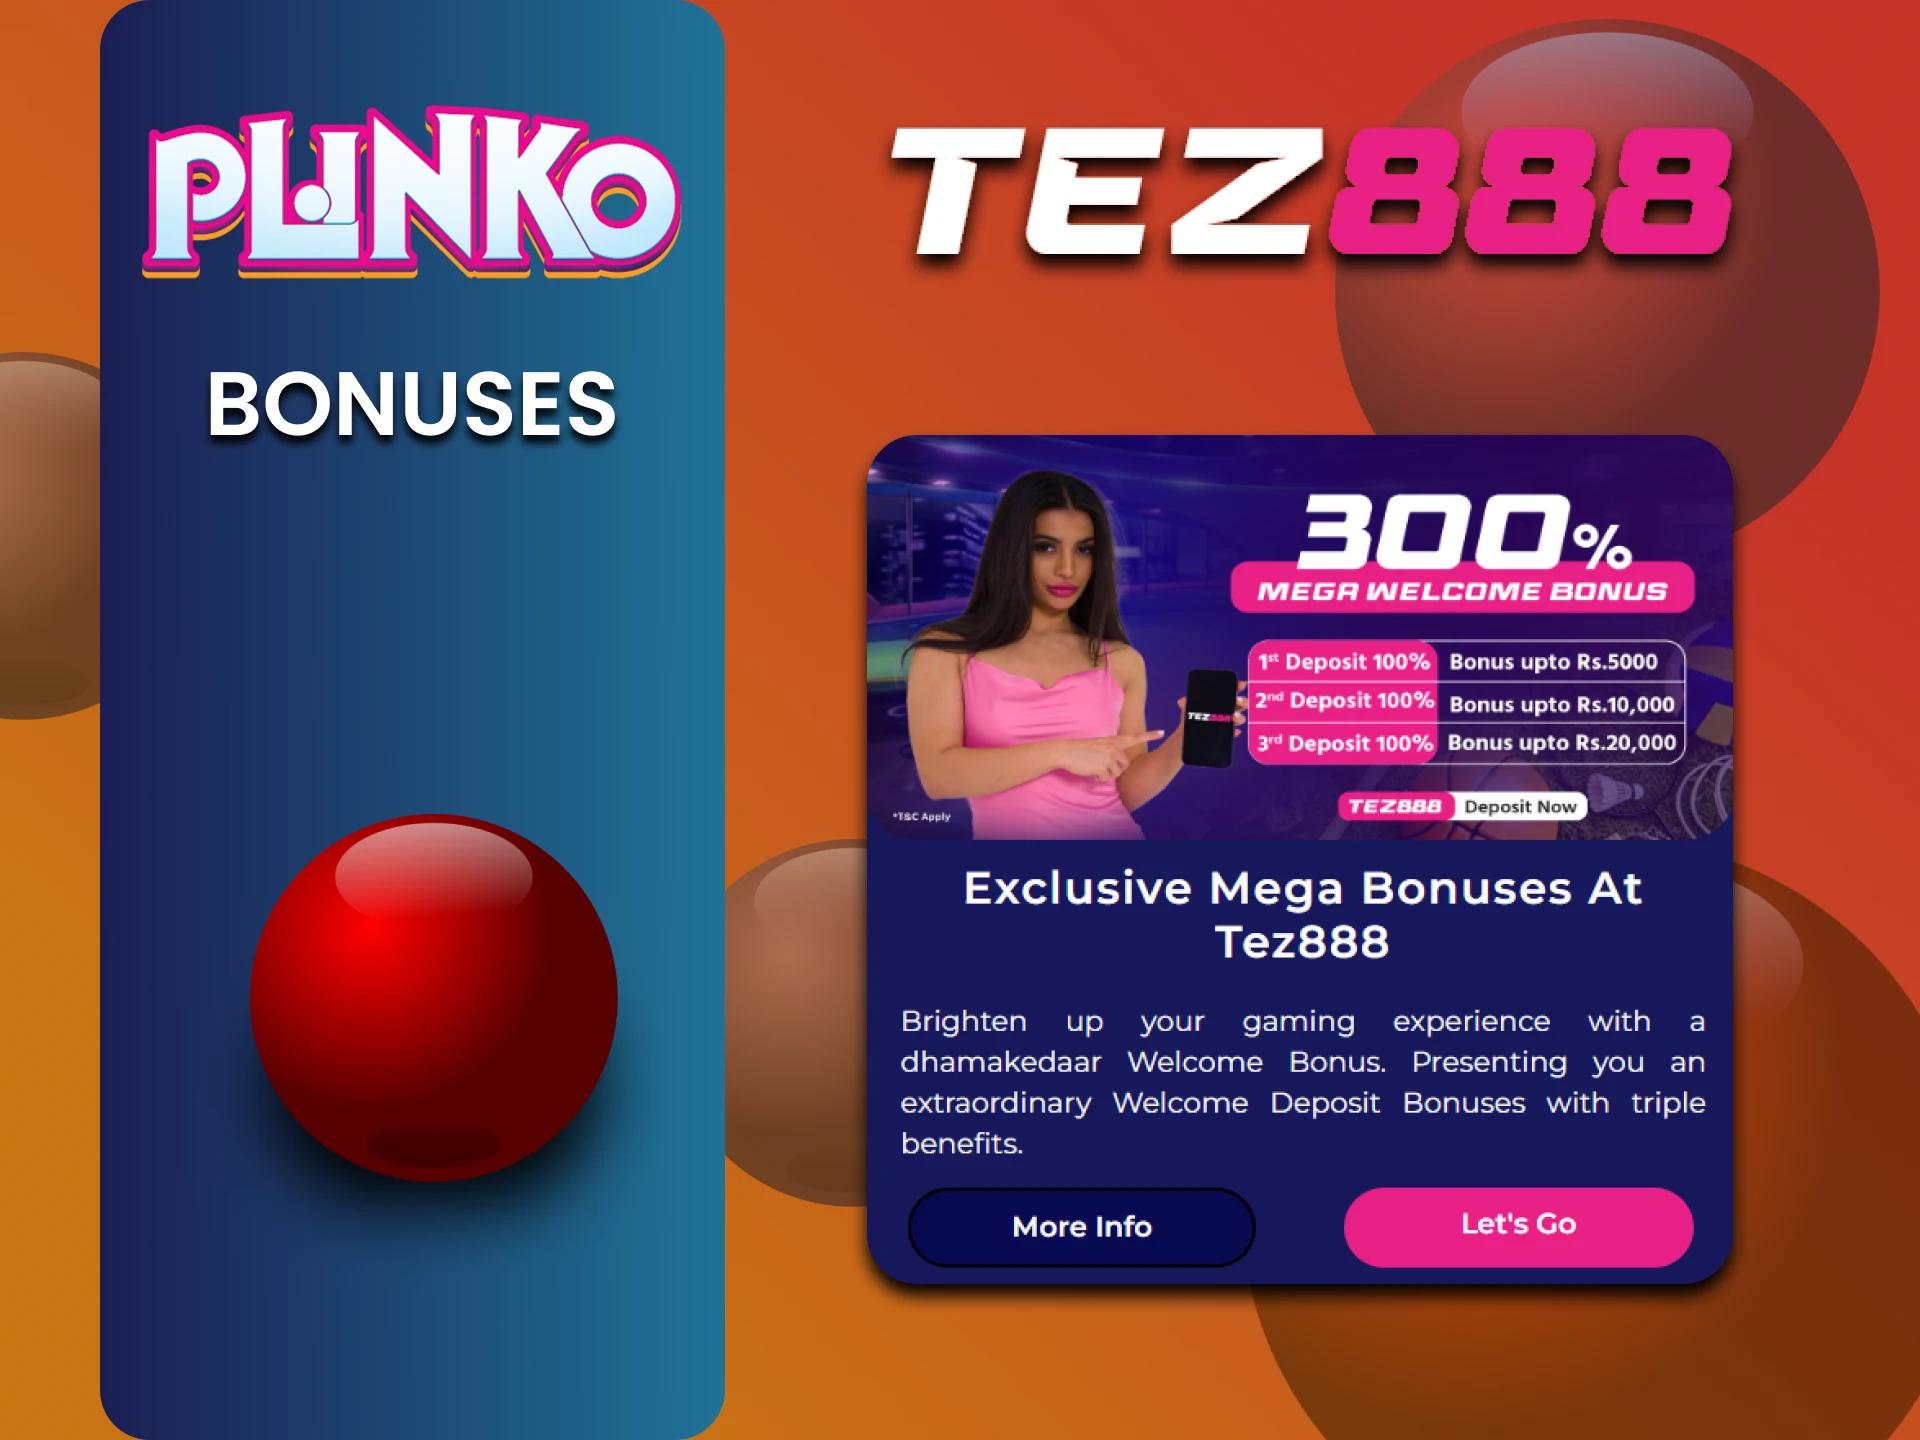 Use bonuses to play Plinko from Tez888.